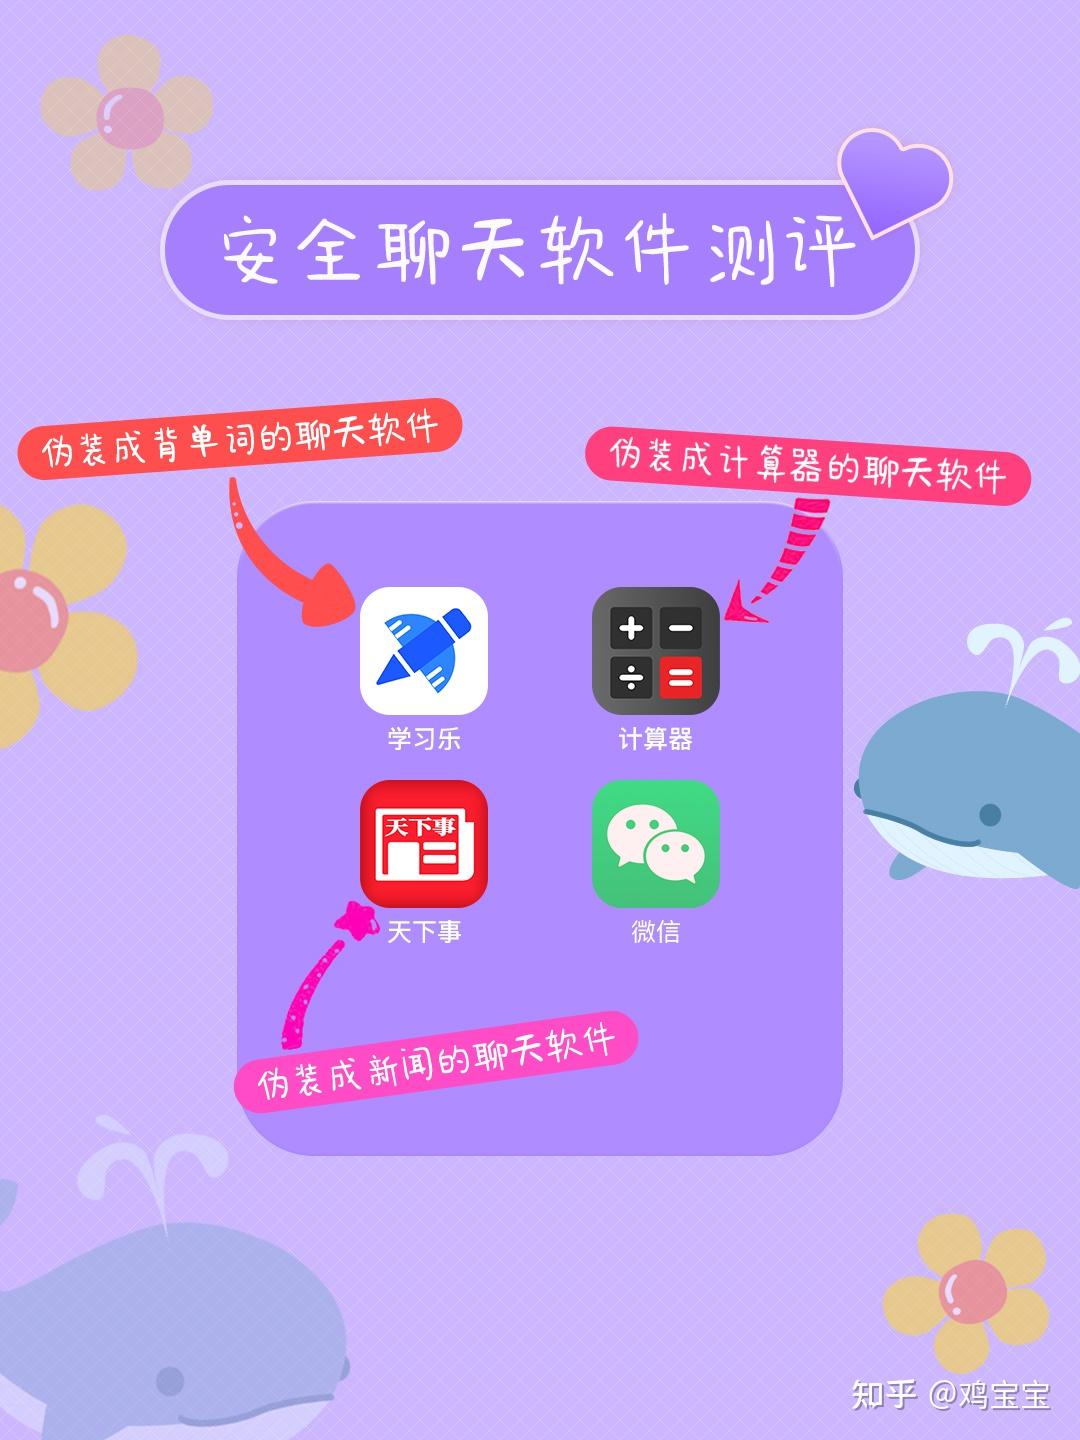 whatsapp中文最新版_中文最新版本_中文最新版樱花校园模拟器下载